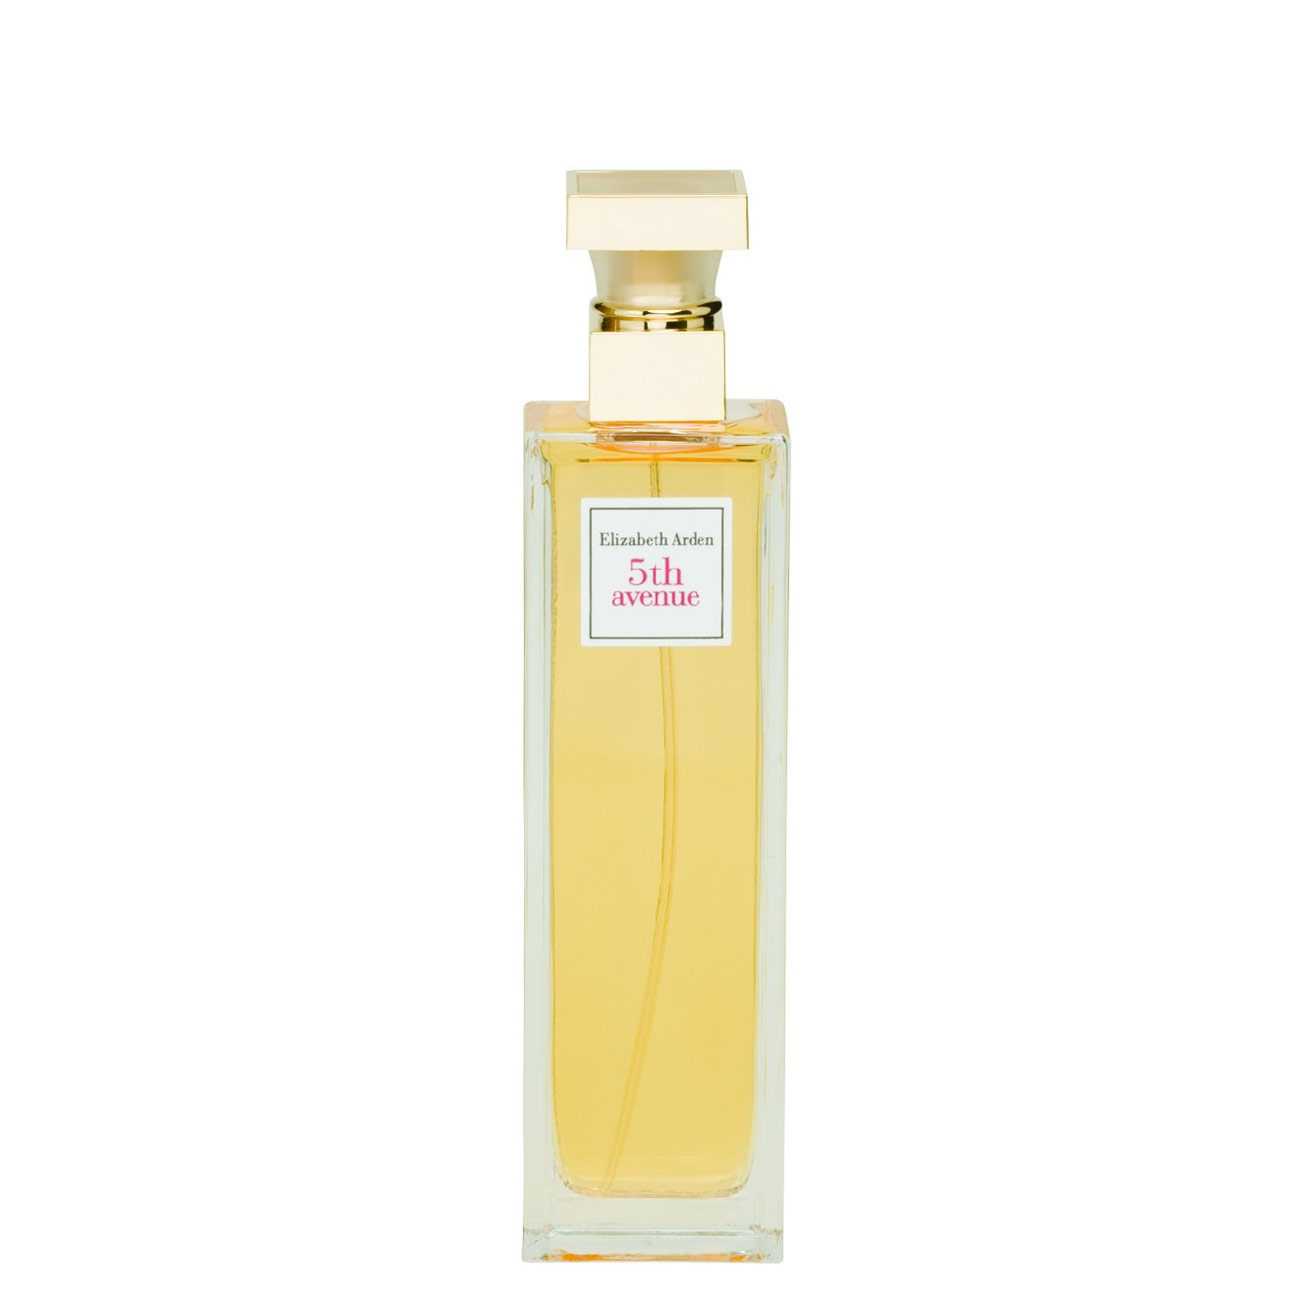 Apa de Parfum Elizabeth Arden 5TH AVENUE 125 ML 125ml cu comanda online